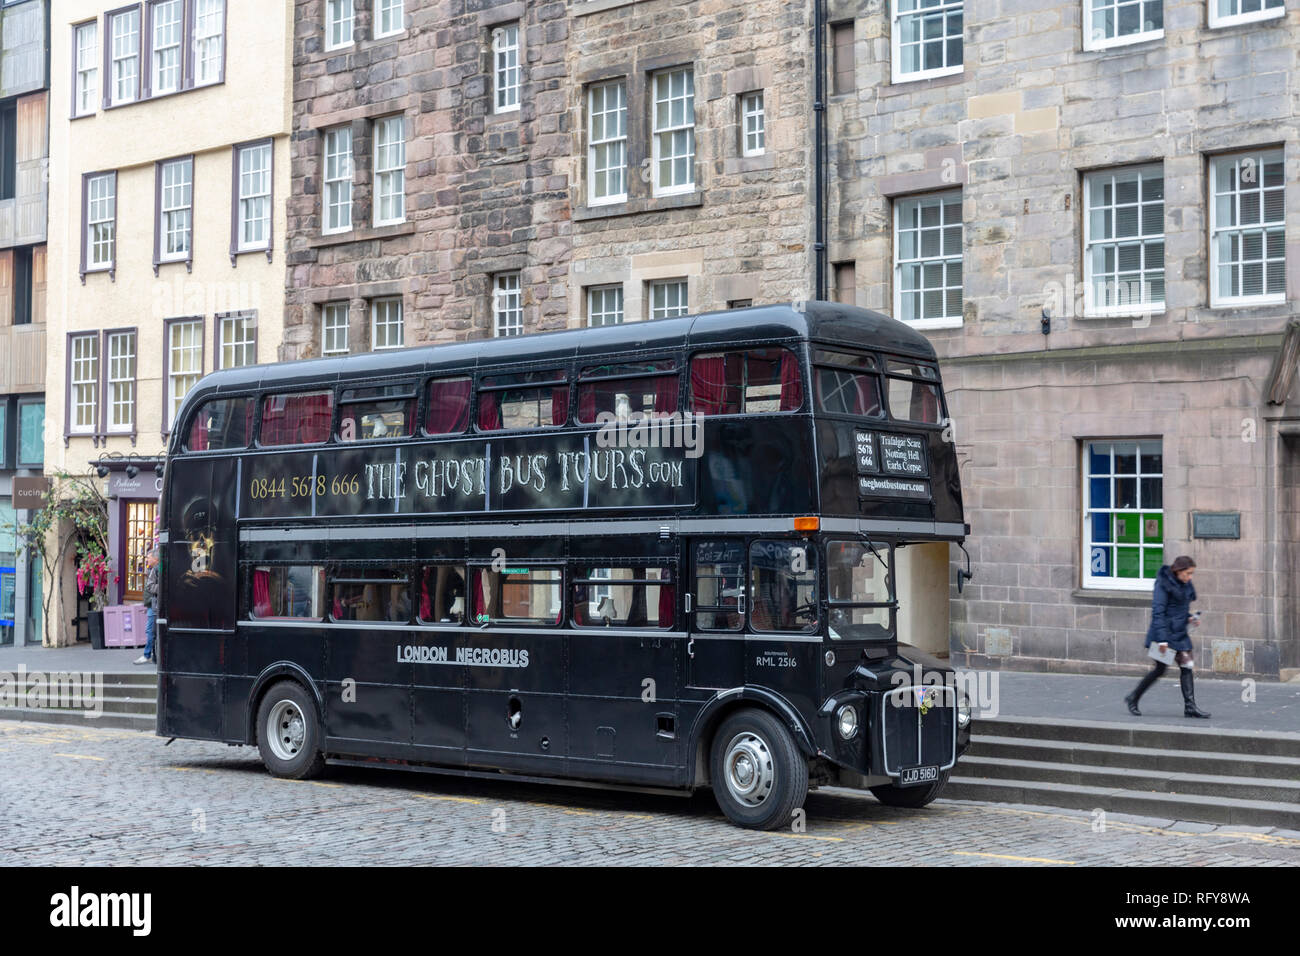 Edinburgh double decker bus for Ghost Tours around Edinburgh,Scotland,UK Stock Photo